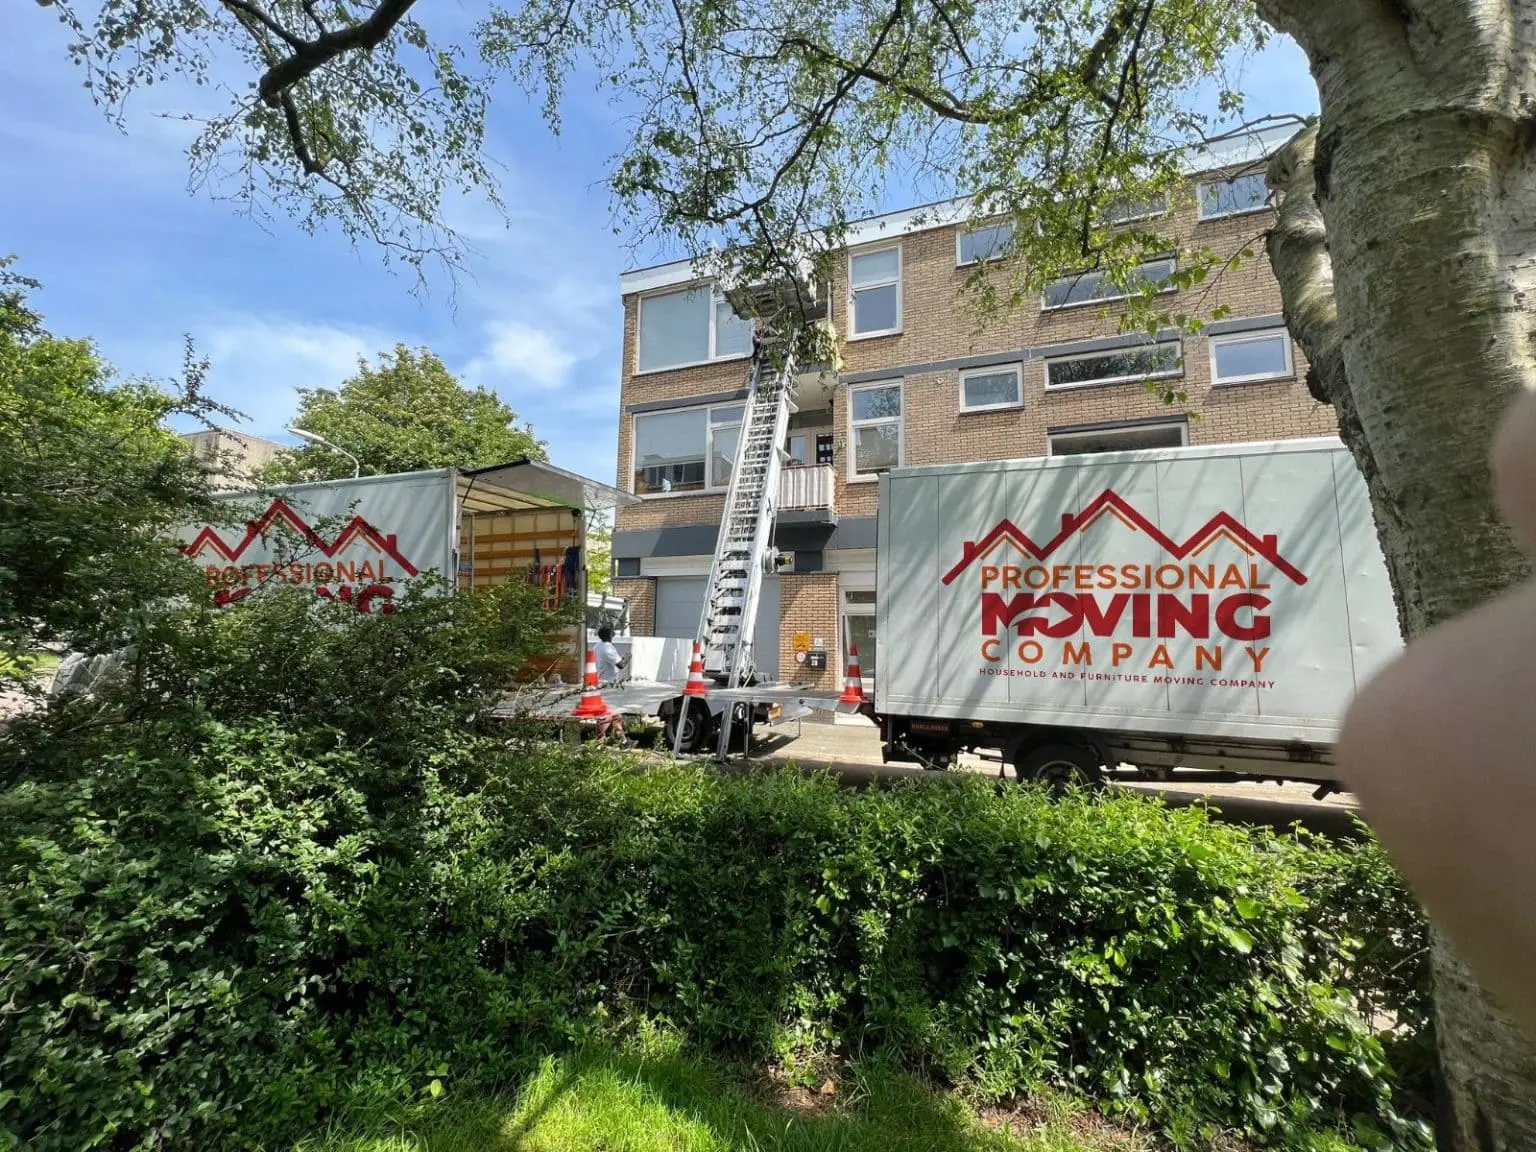 Moving Company Westland | Comprehensive Moving Services in Kaag en Braassem